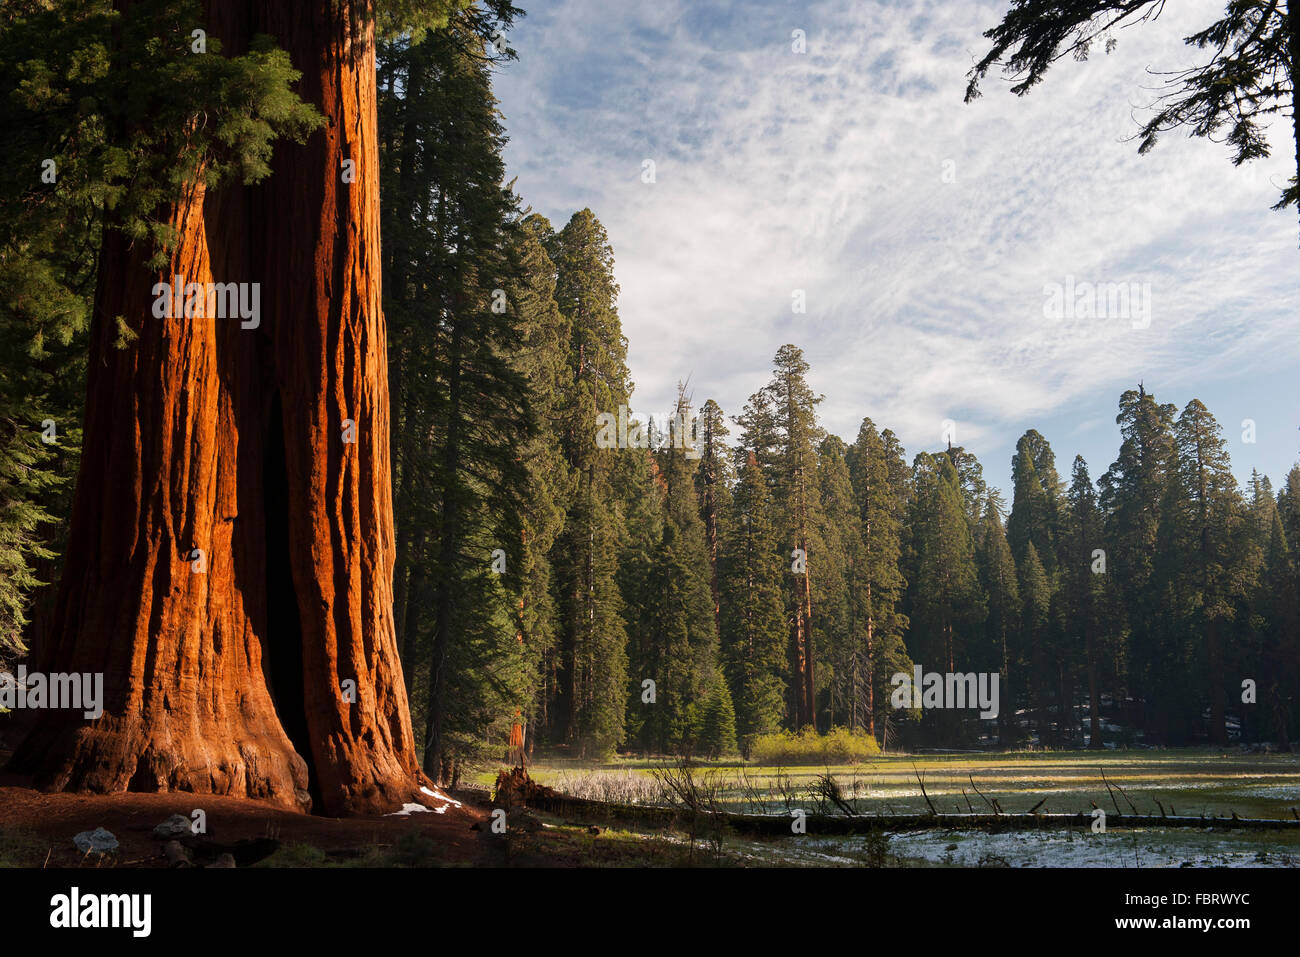 Sequoia gigante, alberi di Sequoia e Kings Canyon National Parks, CALIFORNIA, STATI UNITI D'AMERICA Foto Stock